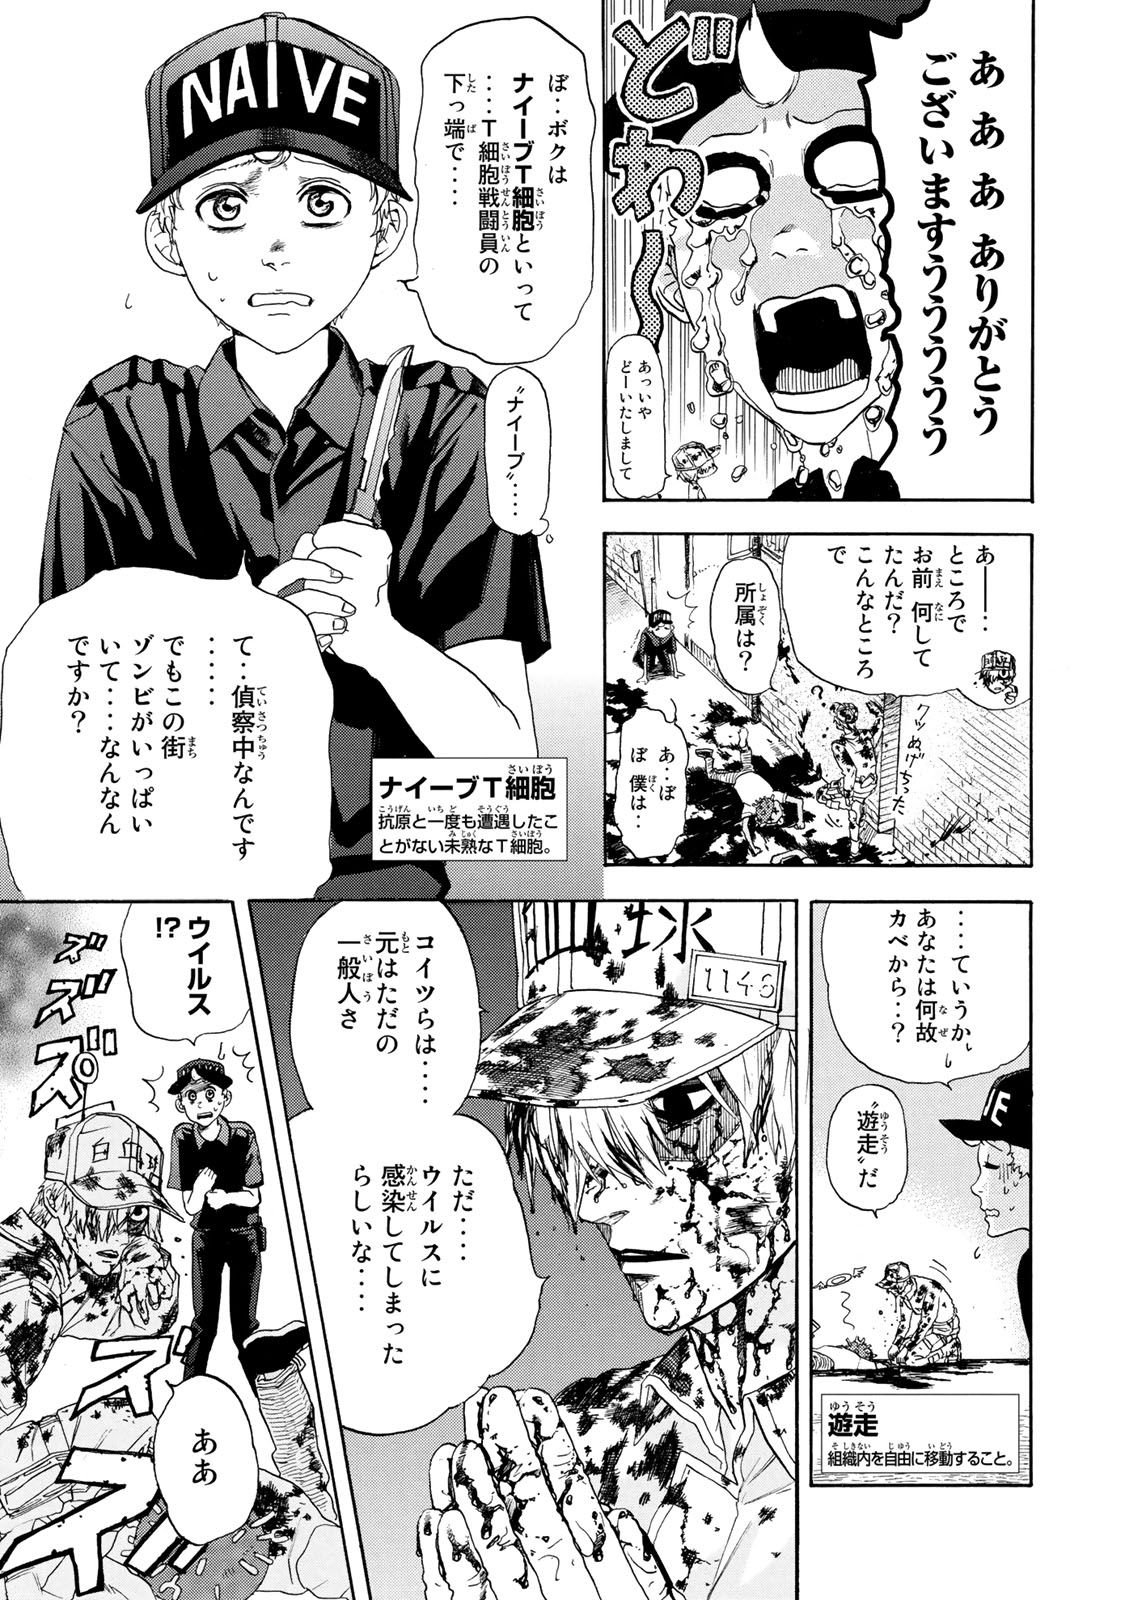 Hataraku Saibou - Chapter 3 - Page 7